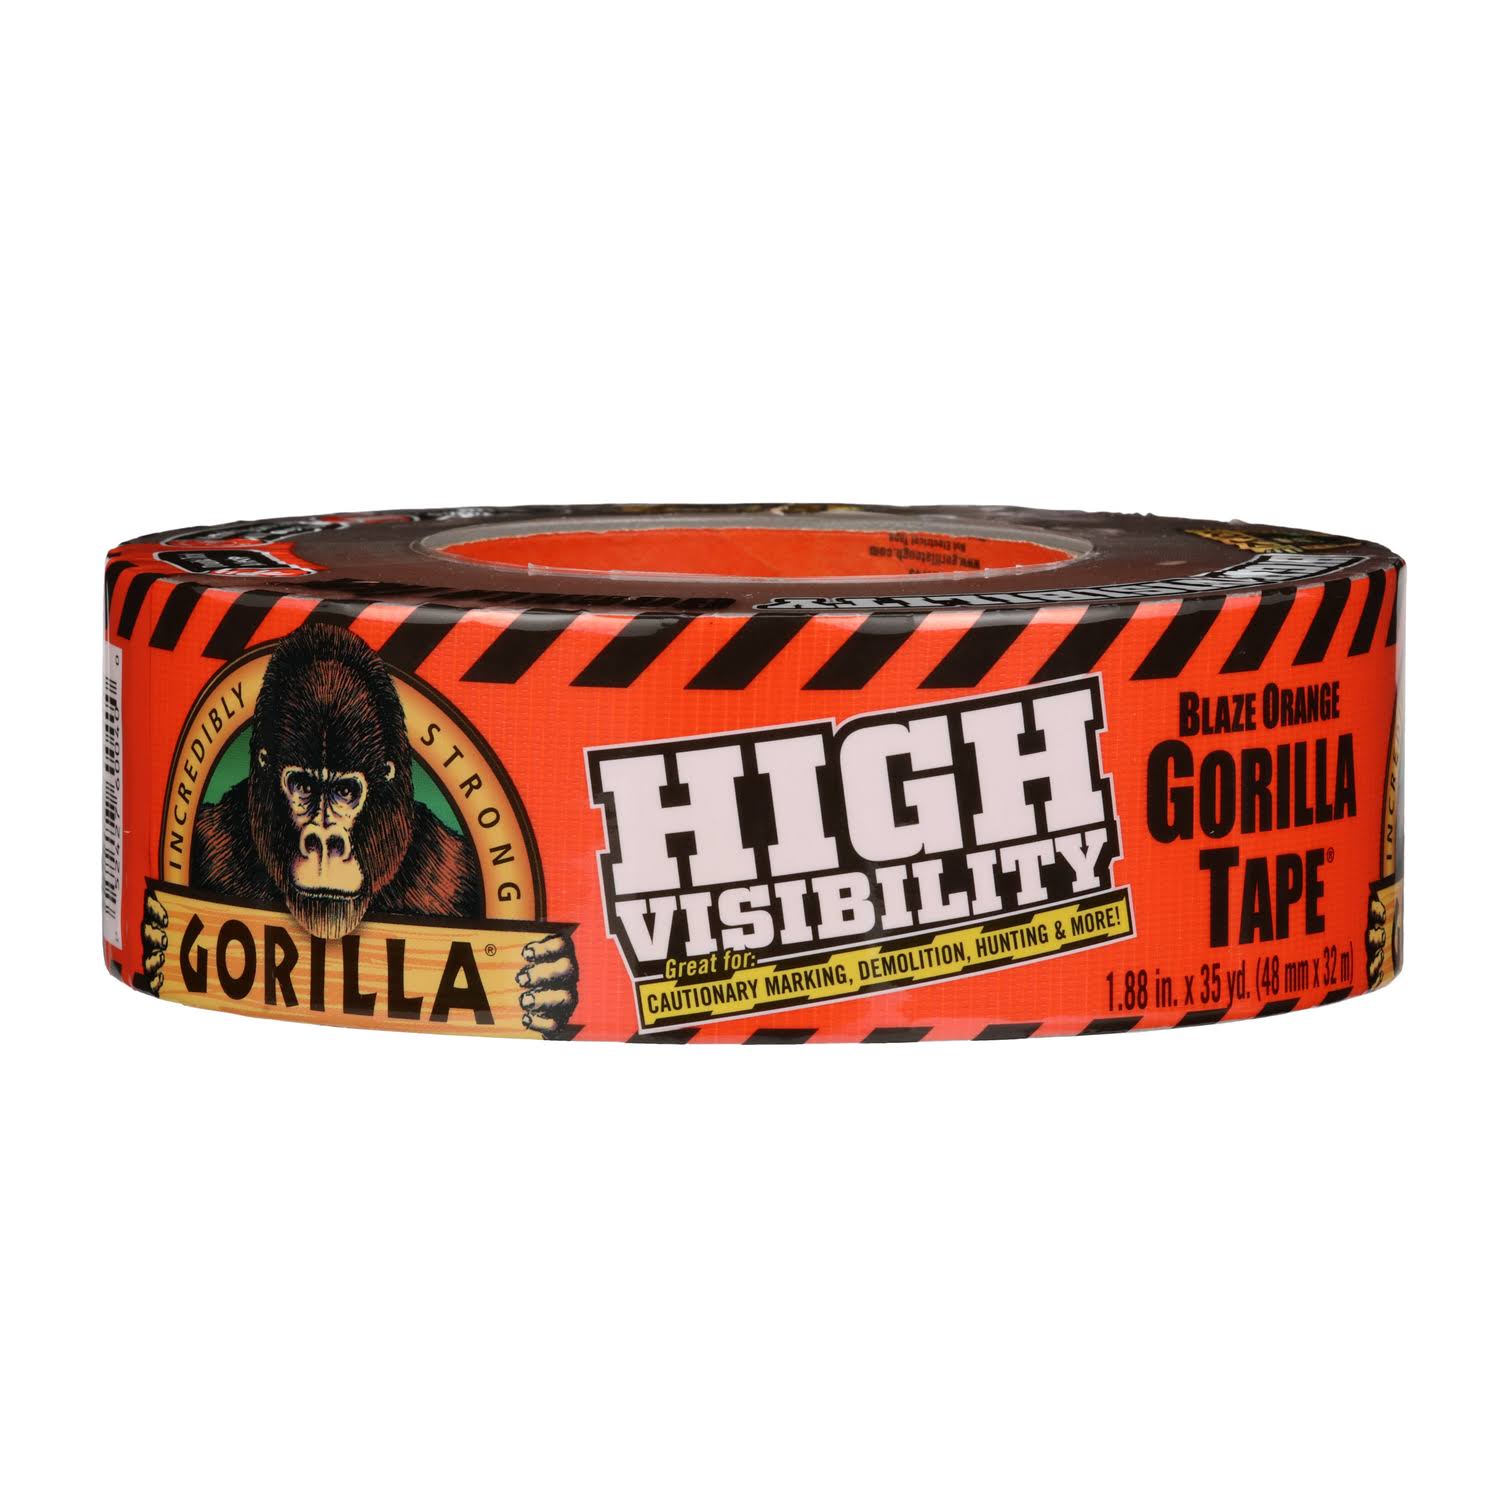 Gorilla High Visibility Tape Duct Tape - Blaze Orange, 1.88" x 35yds